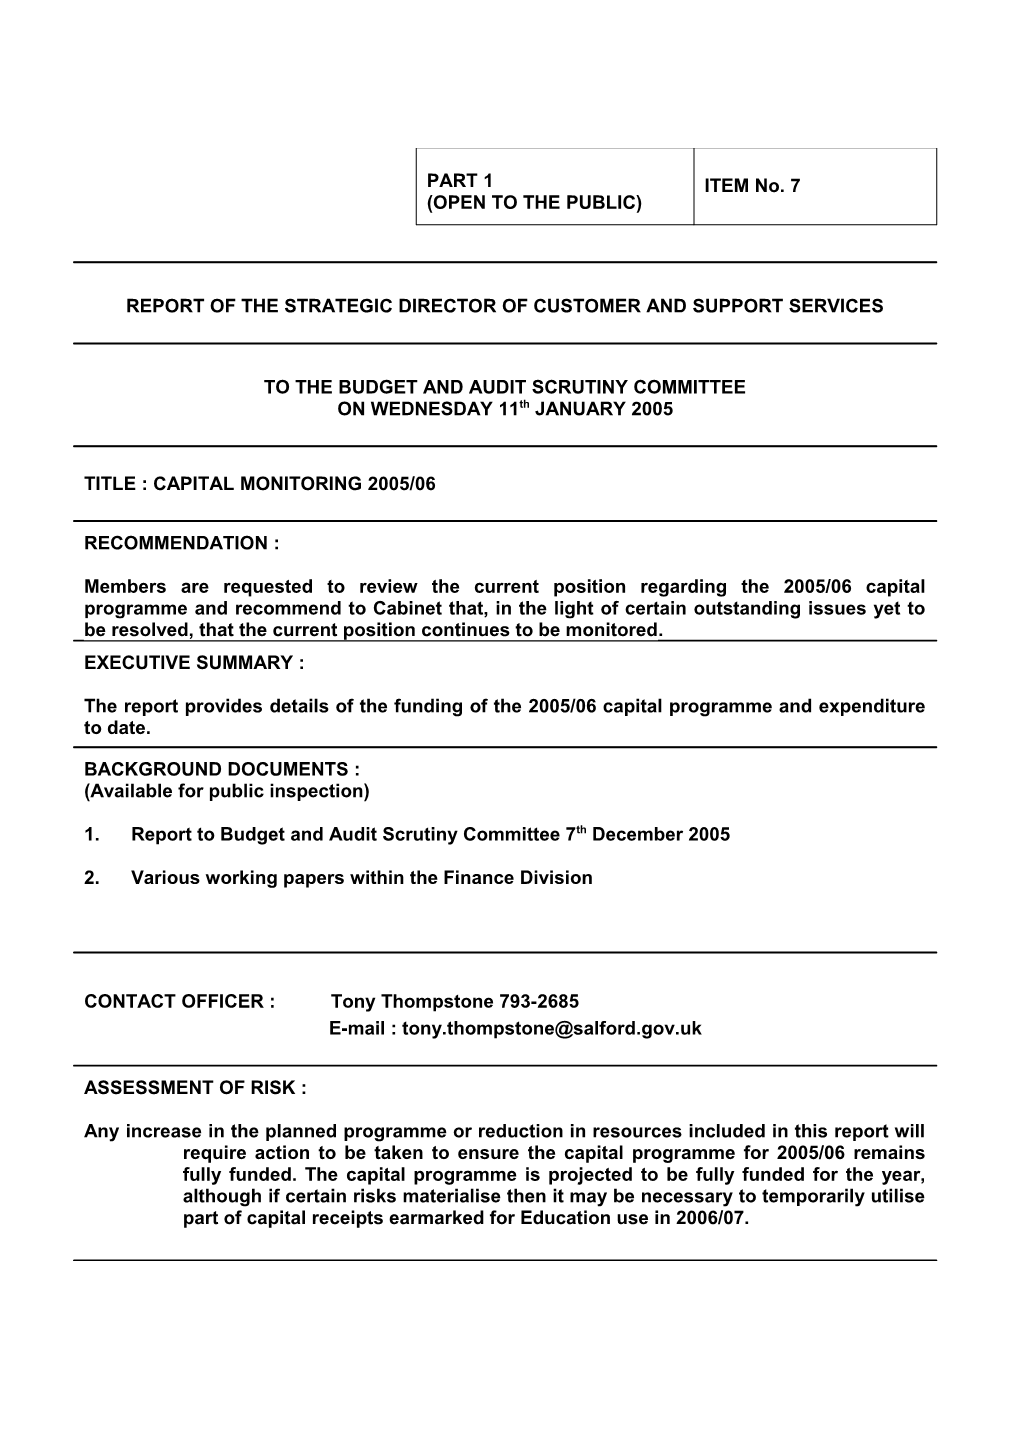 1.2This Report Now Advises Members of Recent Developments Regarding Funding the 2005/06